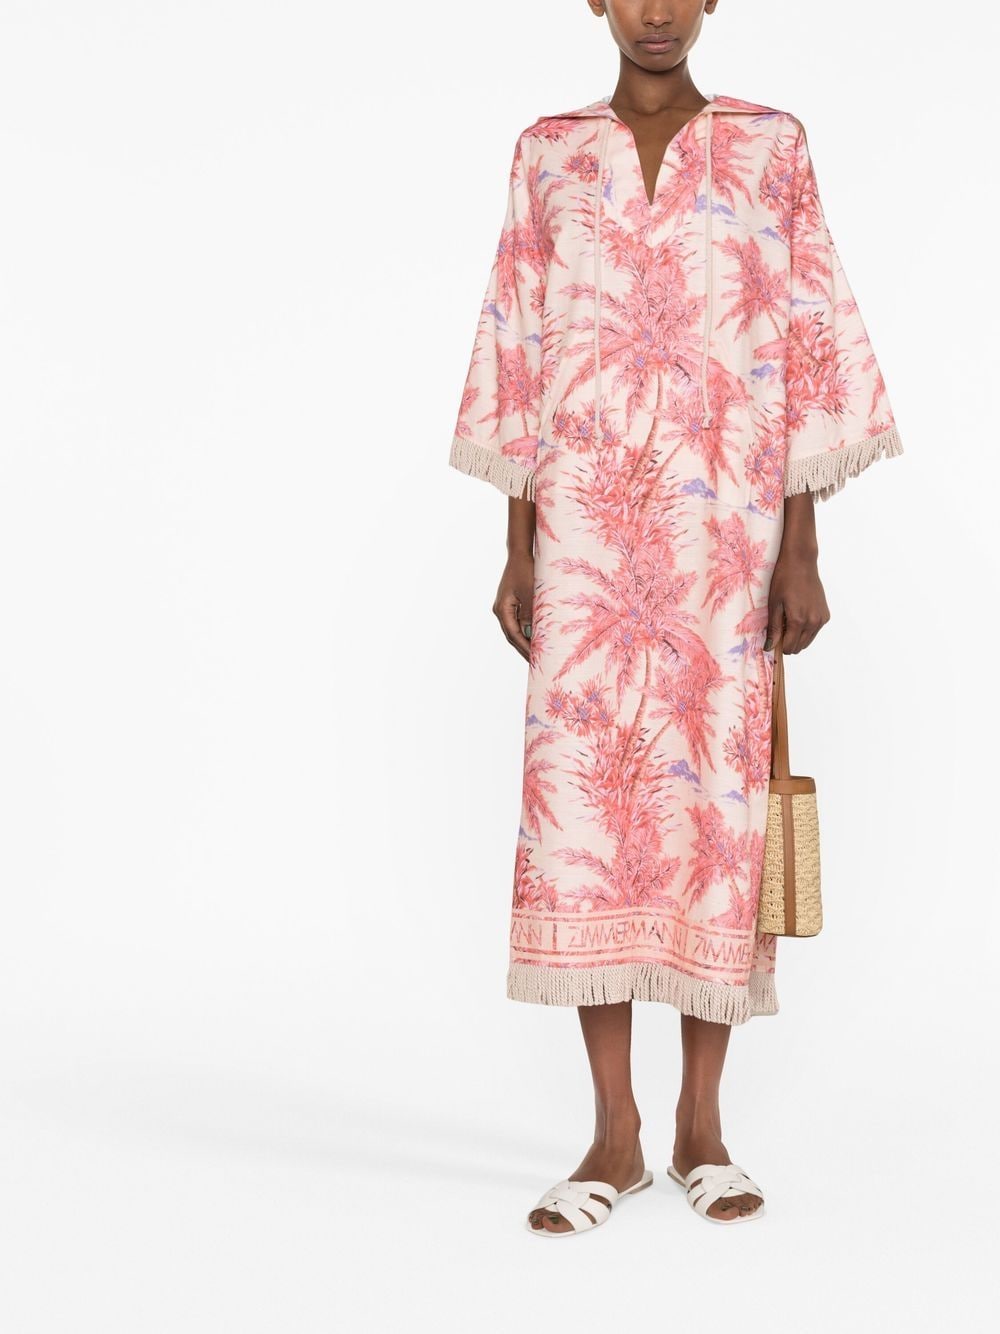 Cira palm-print tasselled dress